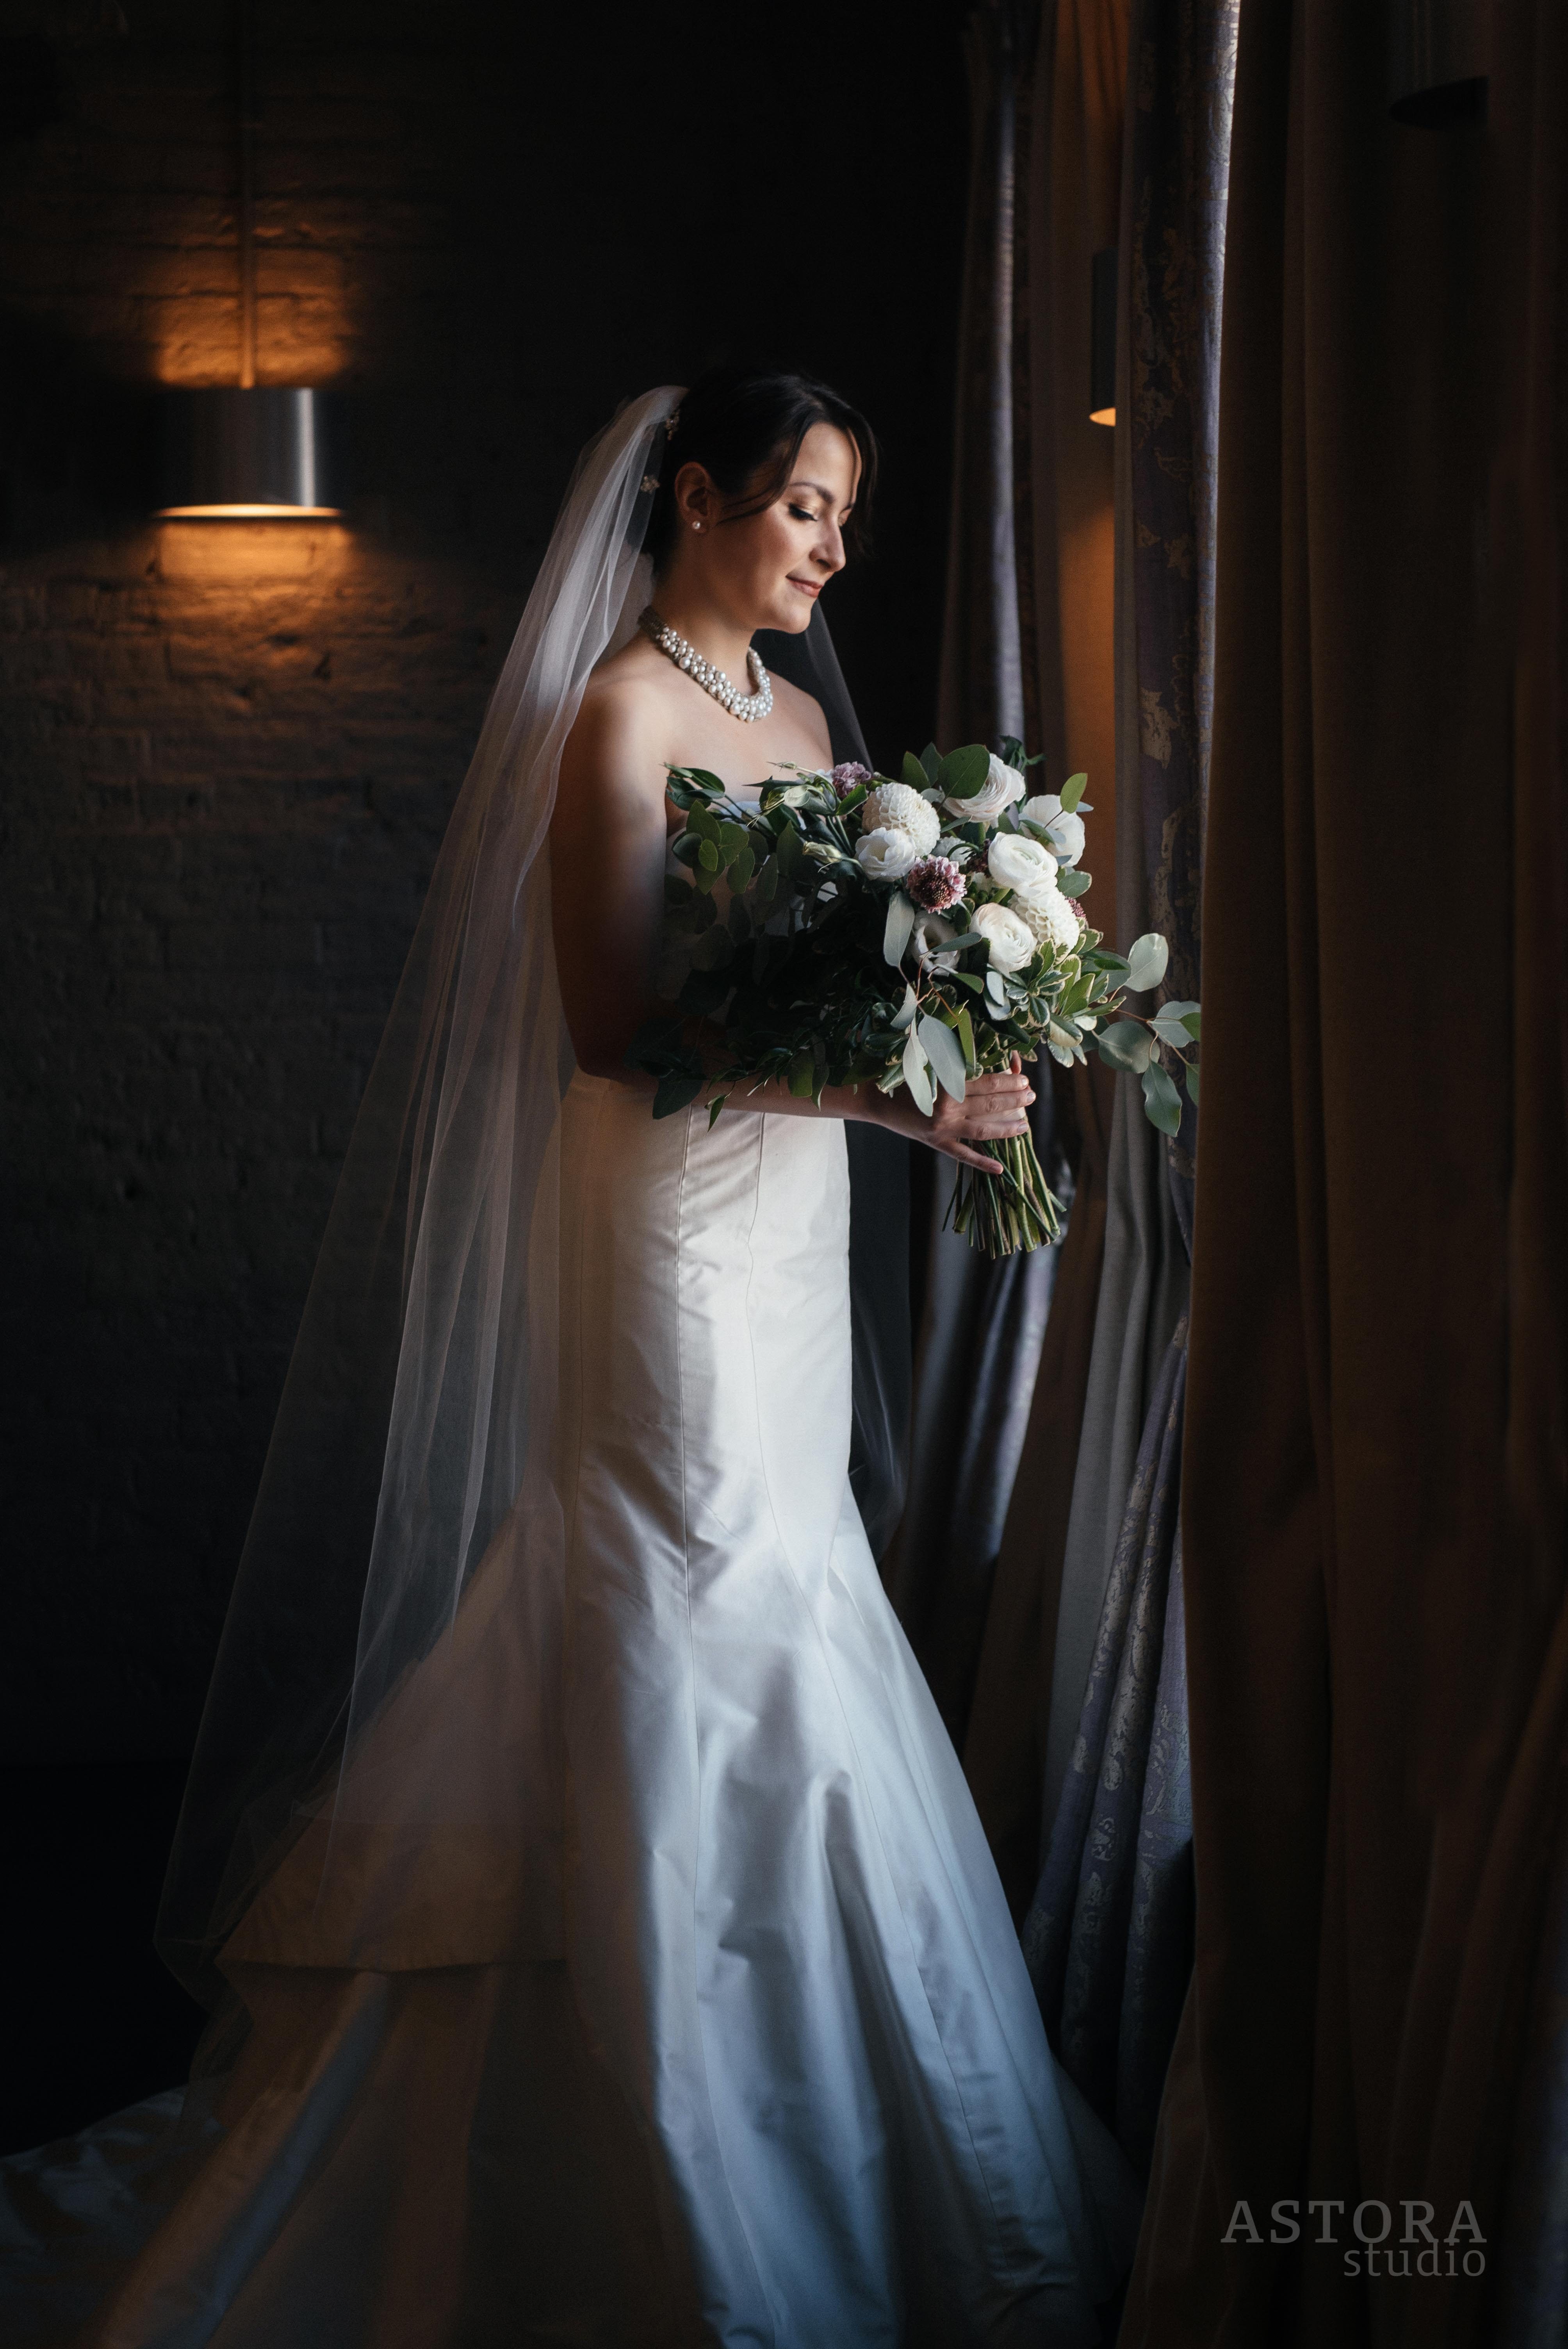 Astora Studio | George Restaurant bridal portrait